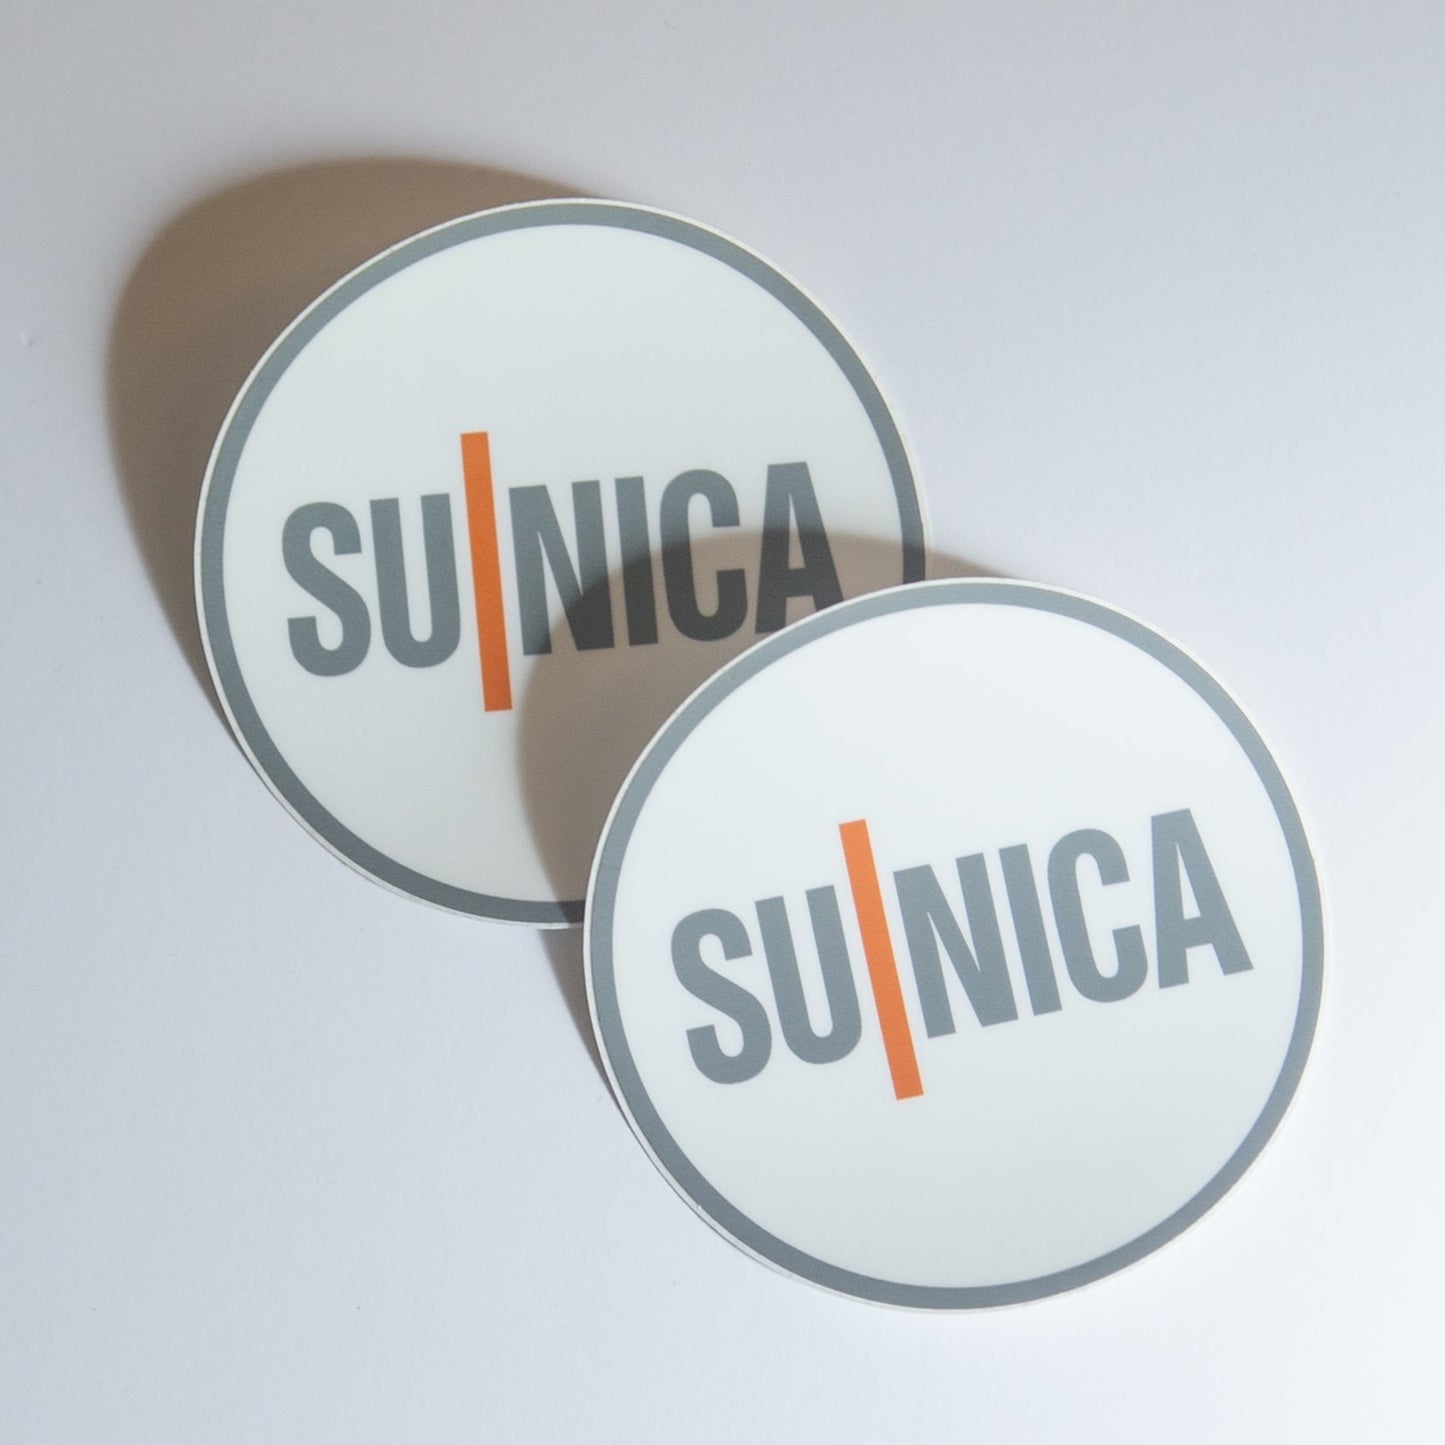 SuNica Logo Sticker